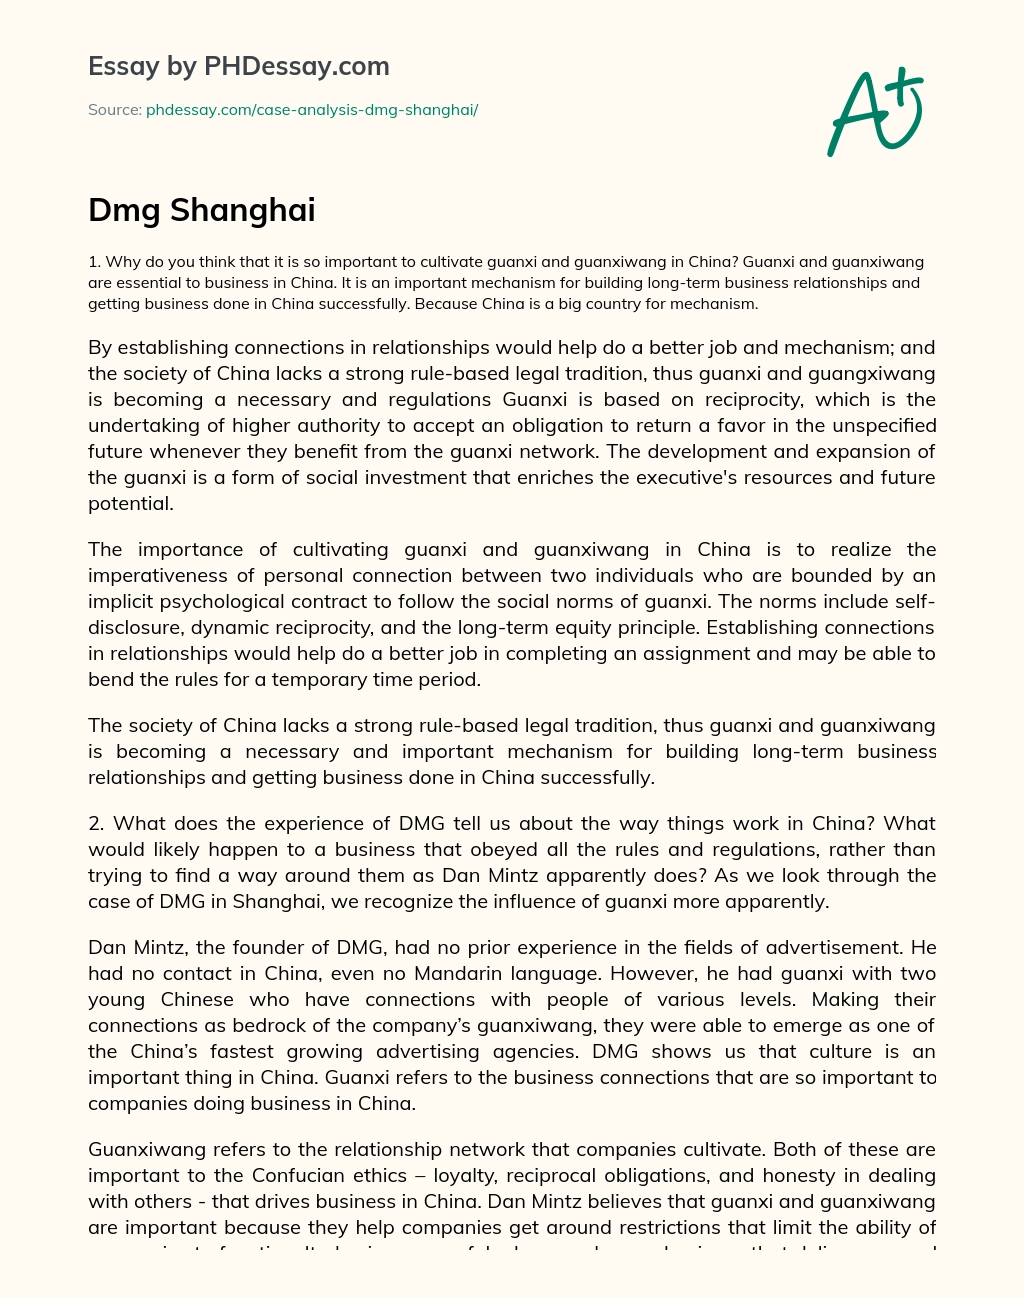 Dmg Shanghai essay